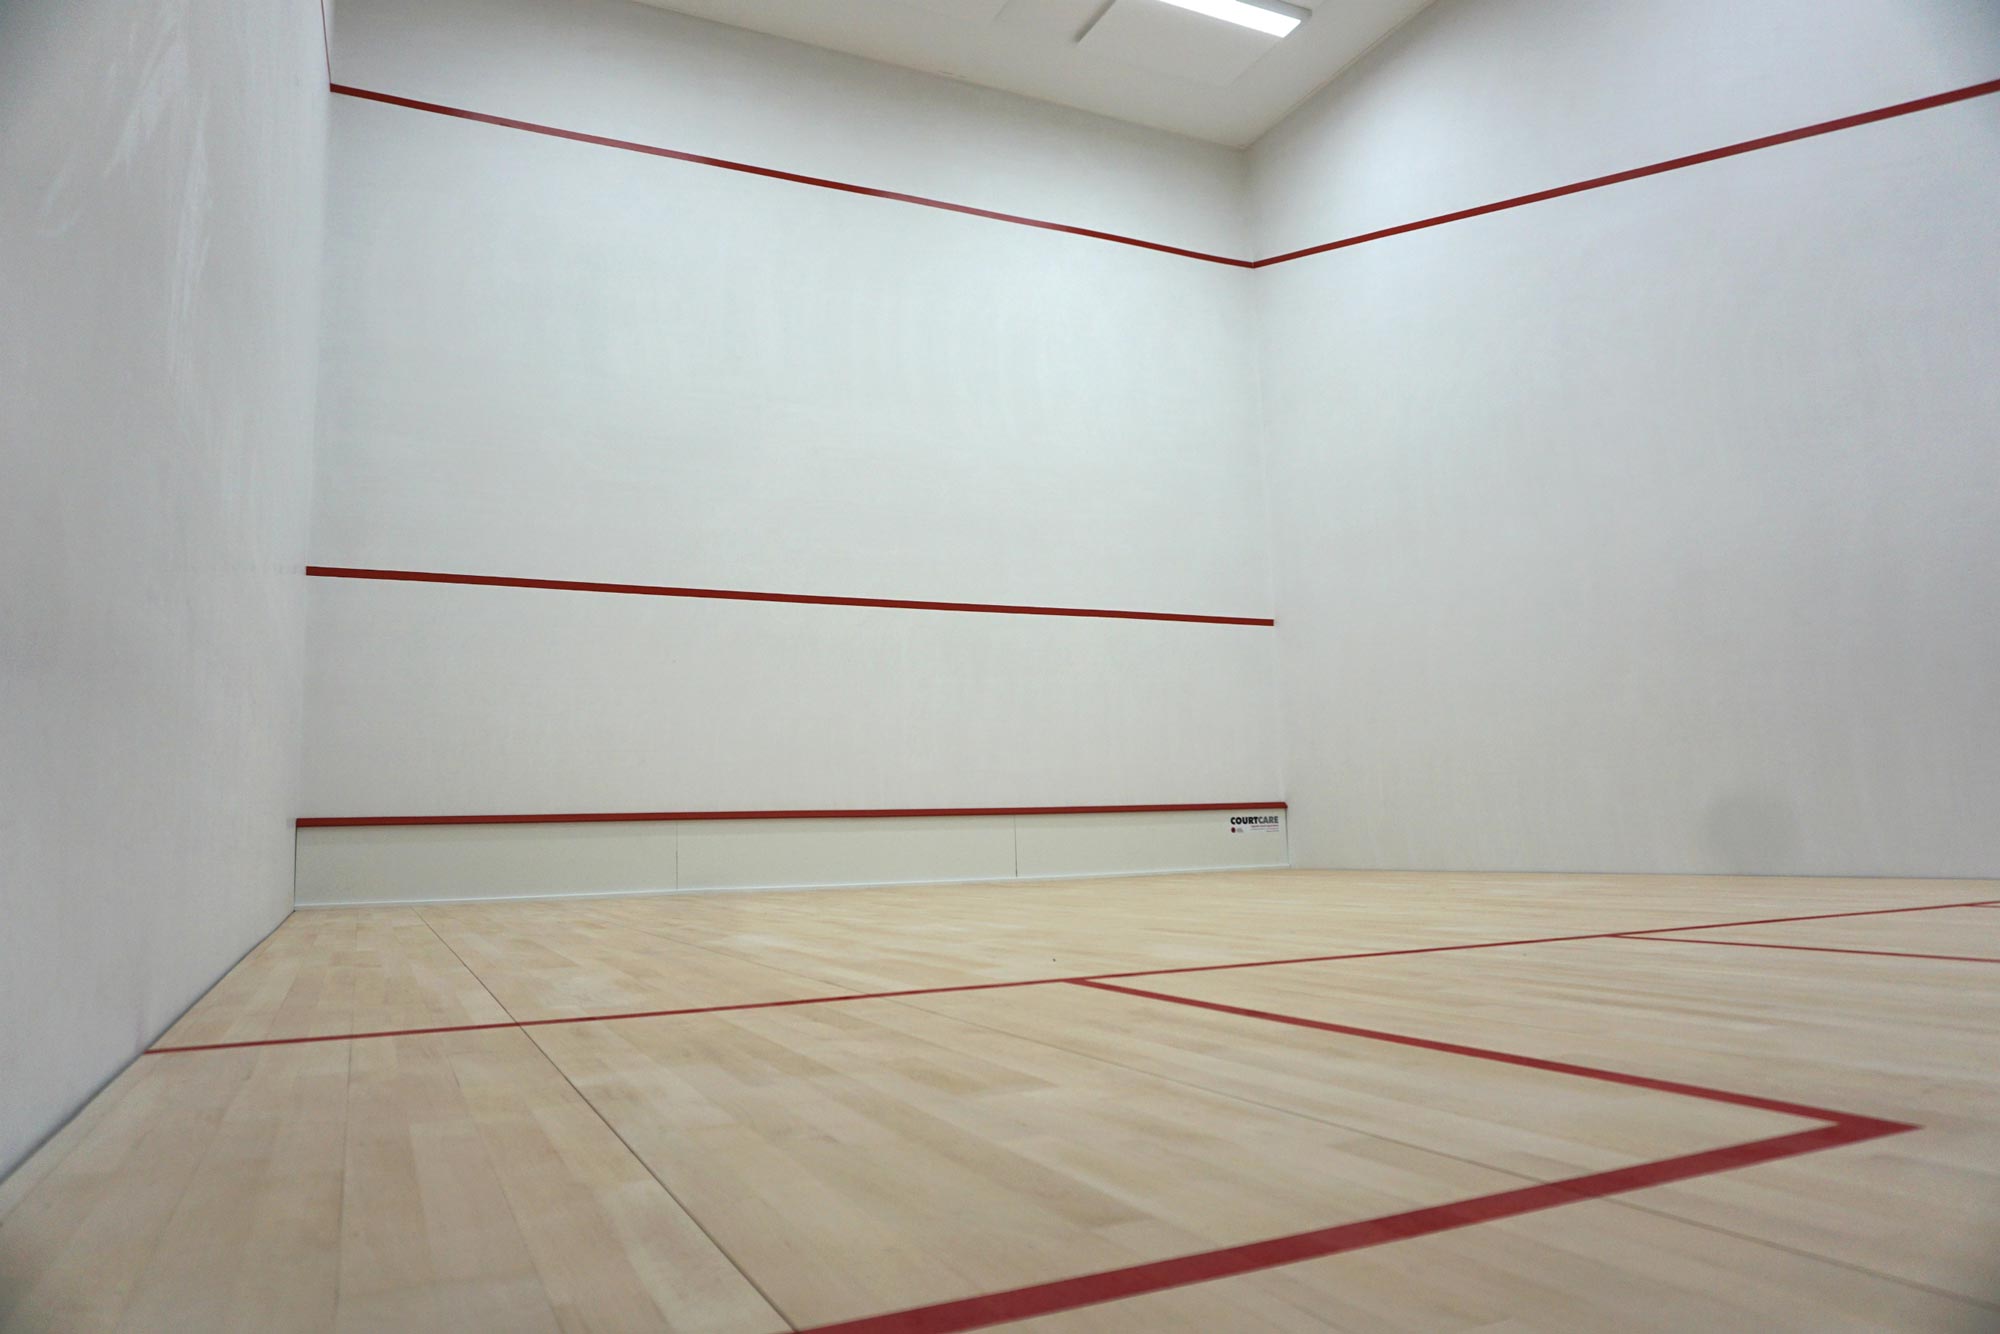 The squash courts harrogate